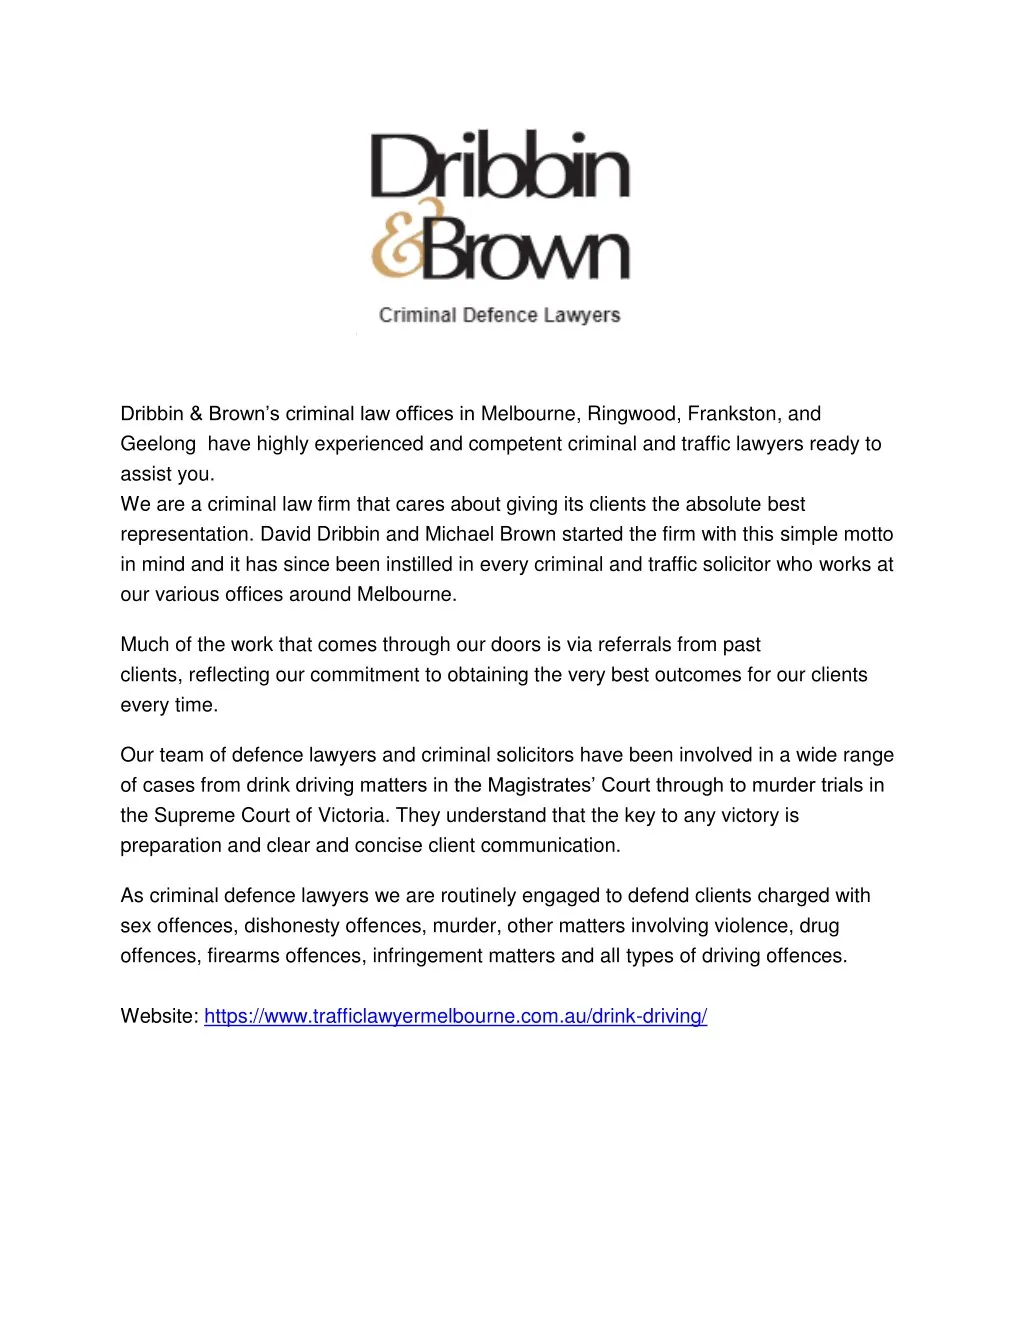 dribbin brown s criminal law offices in melbourne